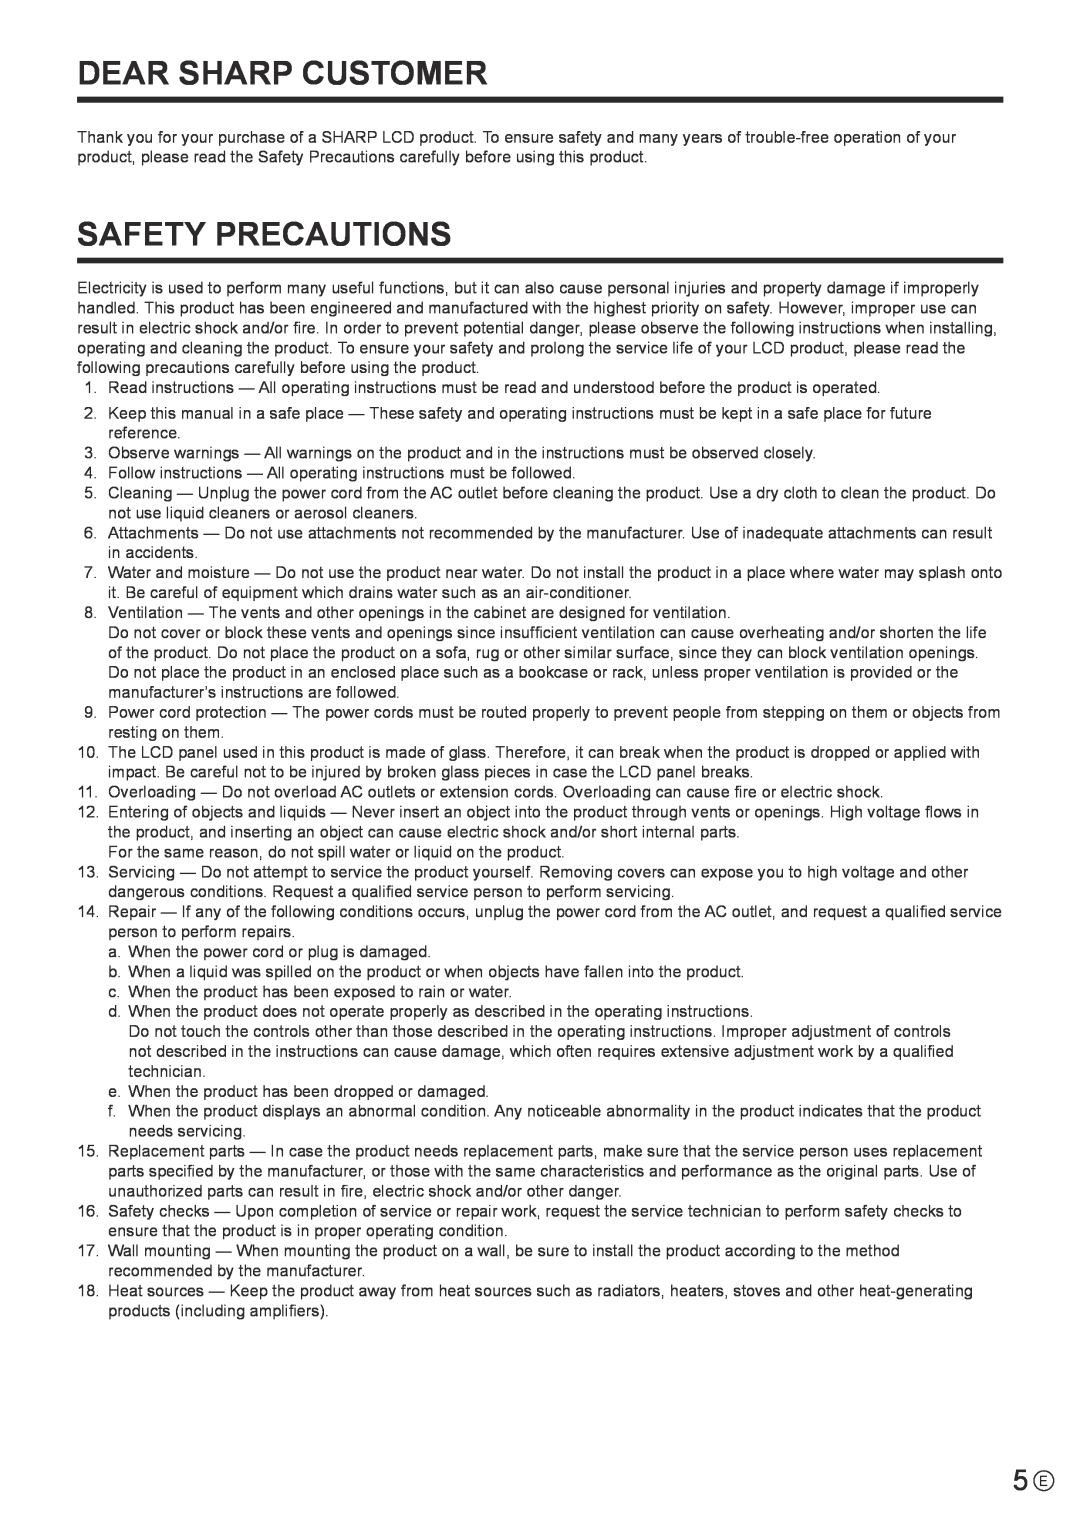 Sharp PN-E602 operation manual Dear Sharp Customer, Safety Precautions 